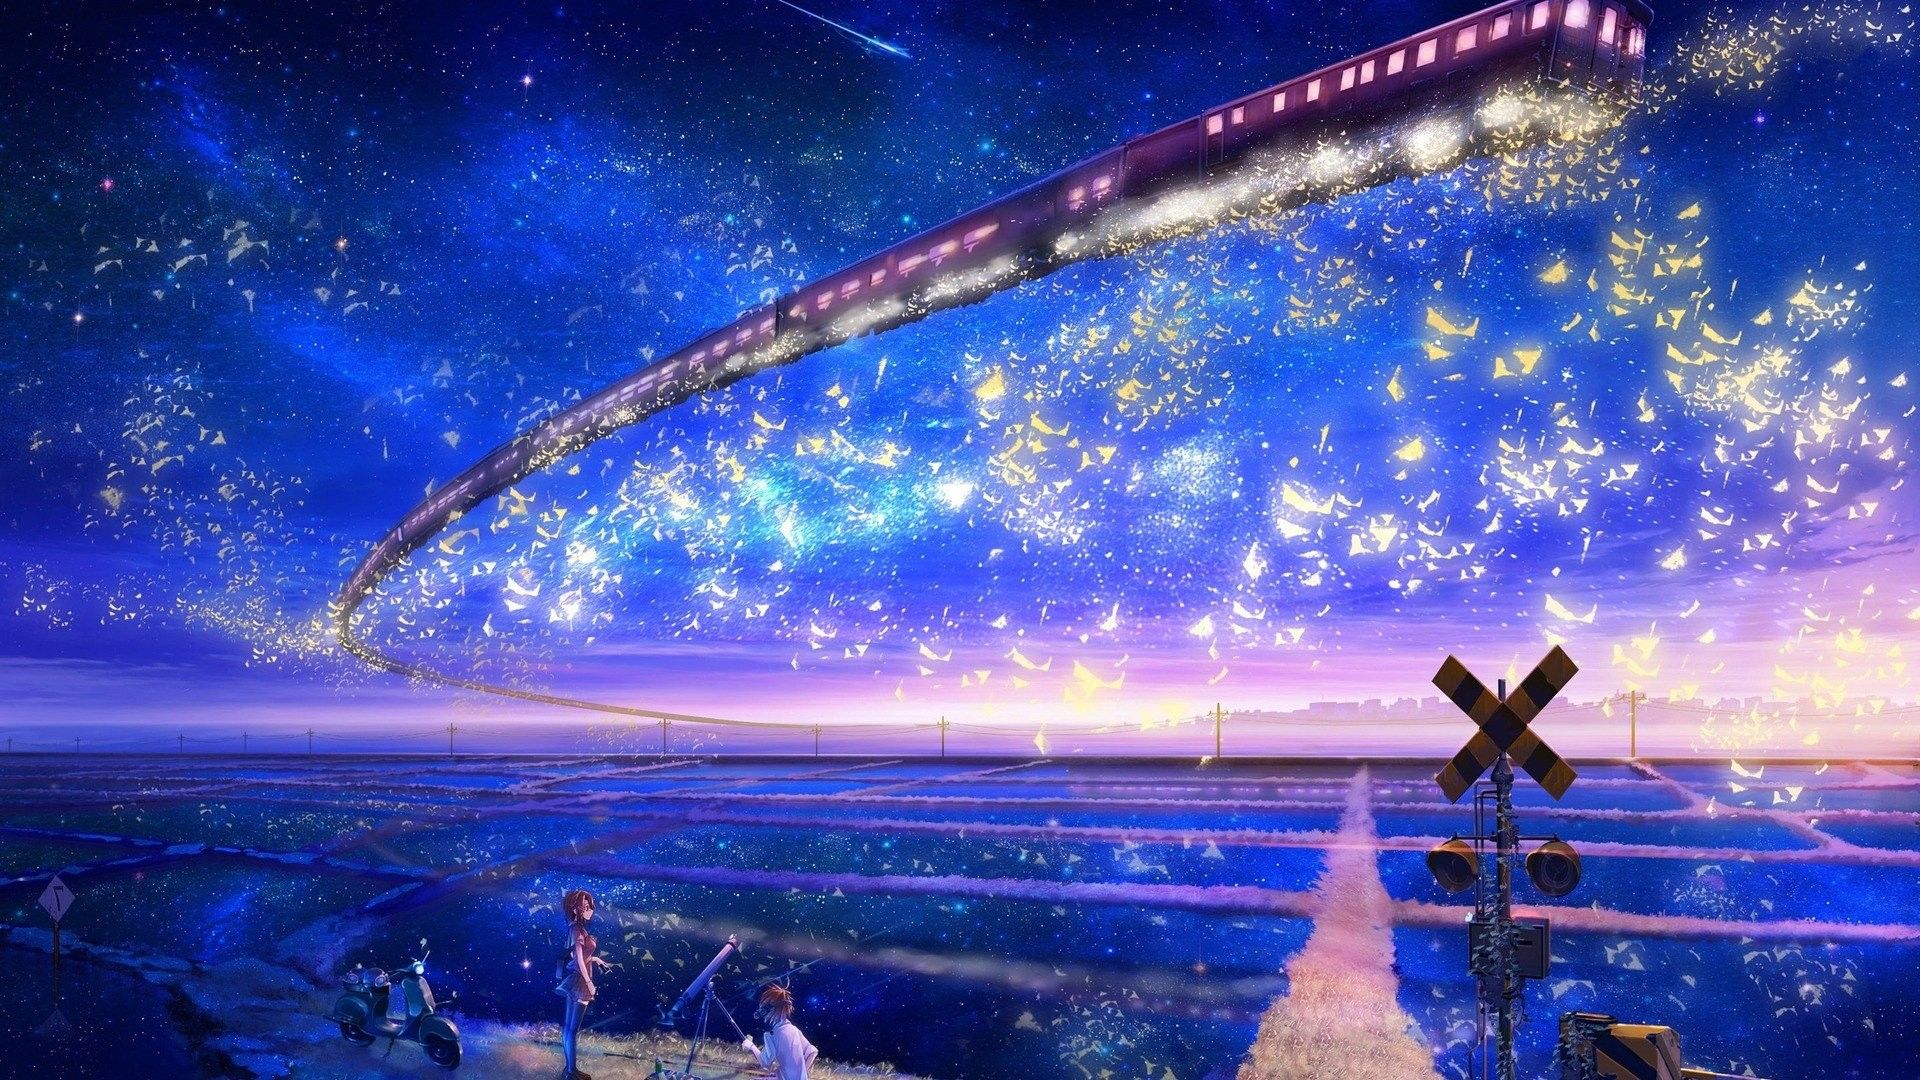 Dãy ngân hà giữa bầu trời đêm | かわいいアニメの壁紙, イラスト, 幻想的なイラスト